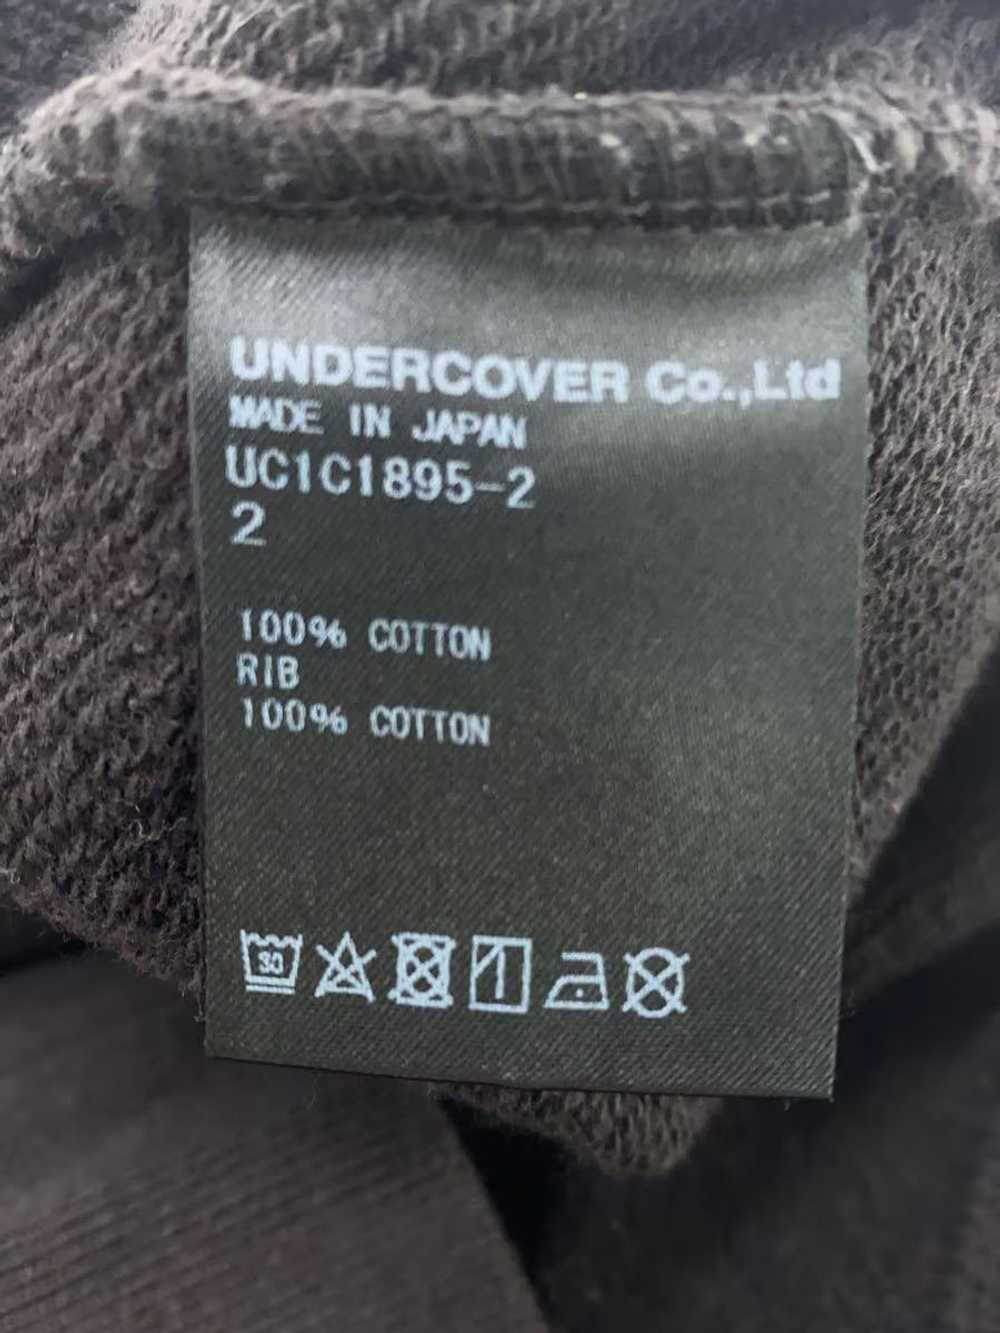 Undercover Oversized "FIN" Apple Sweatshirt - image 4